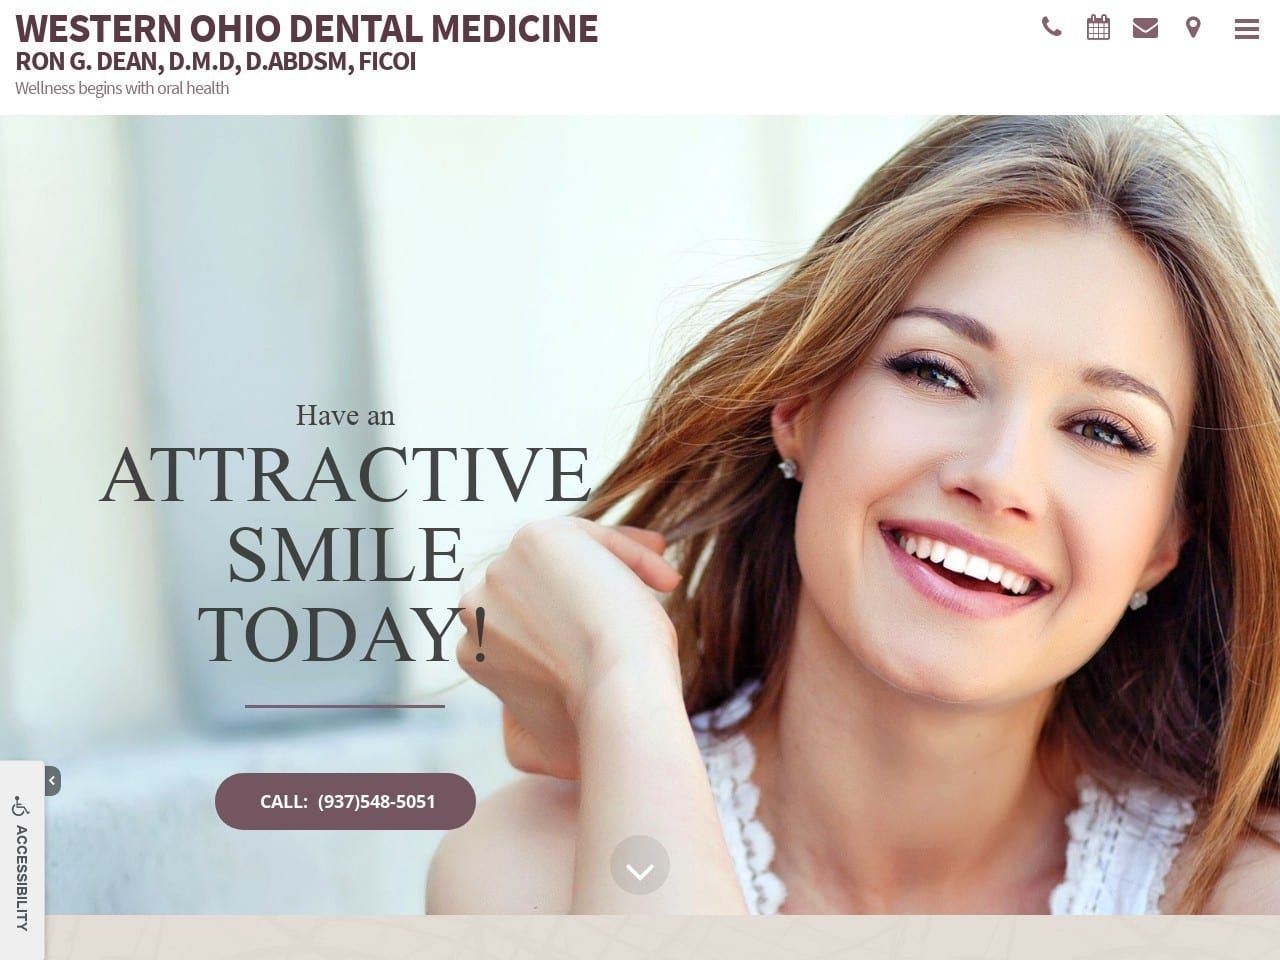 Western Ohio Dental Medicine Website Screenshot from rdeandmd.com